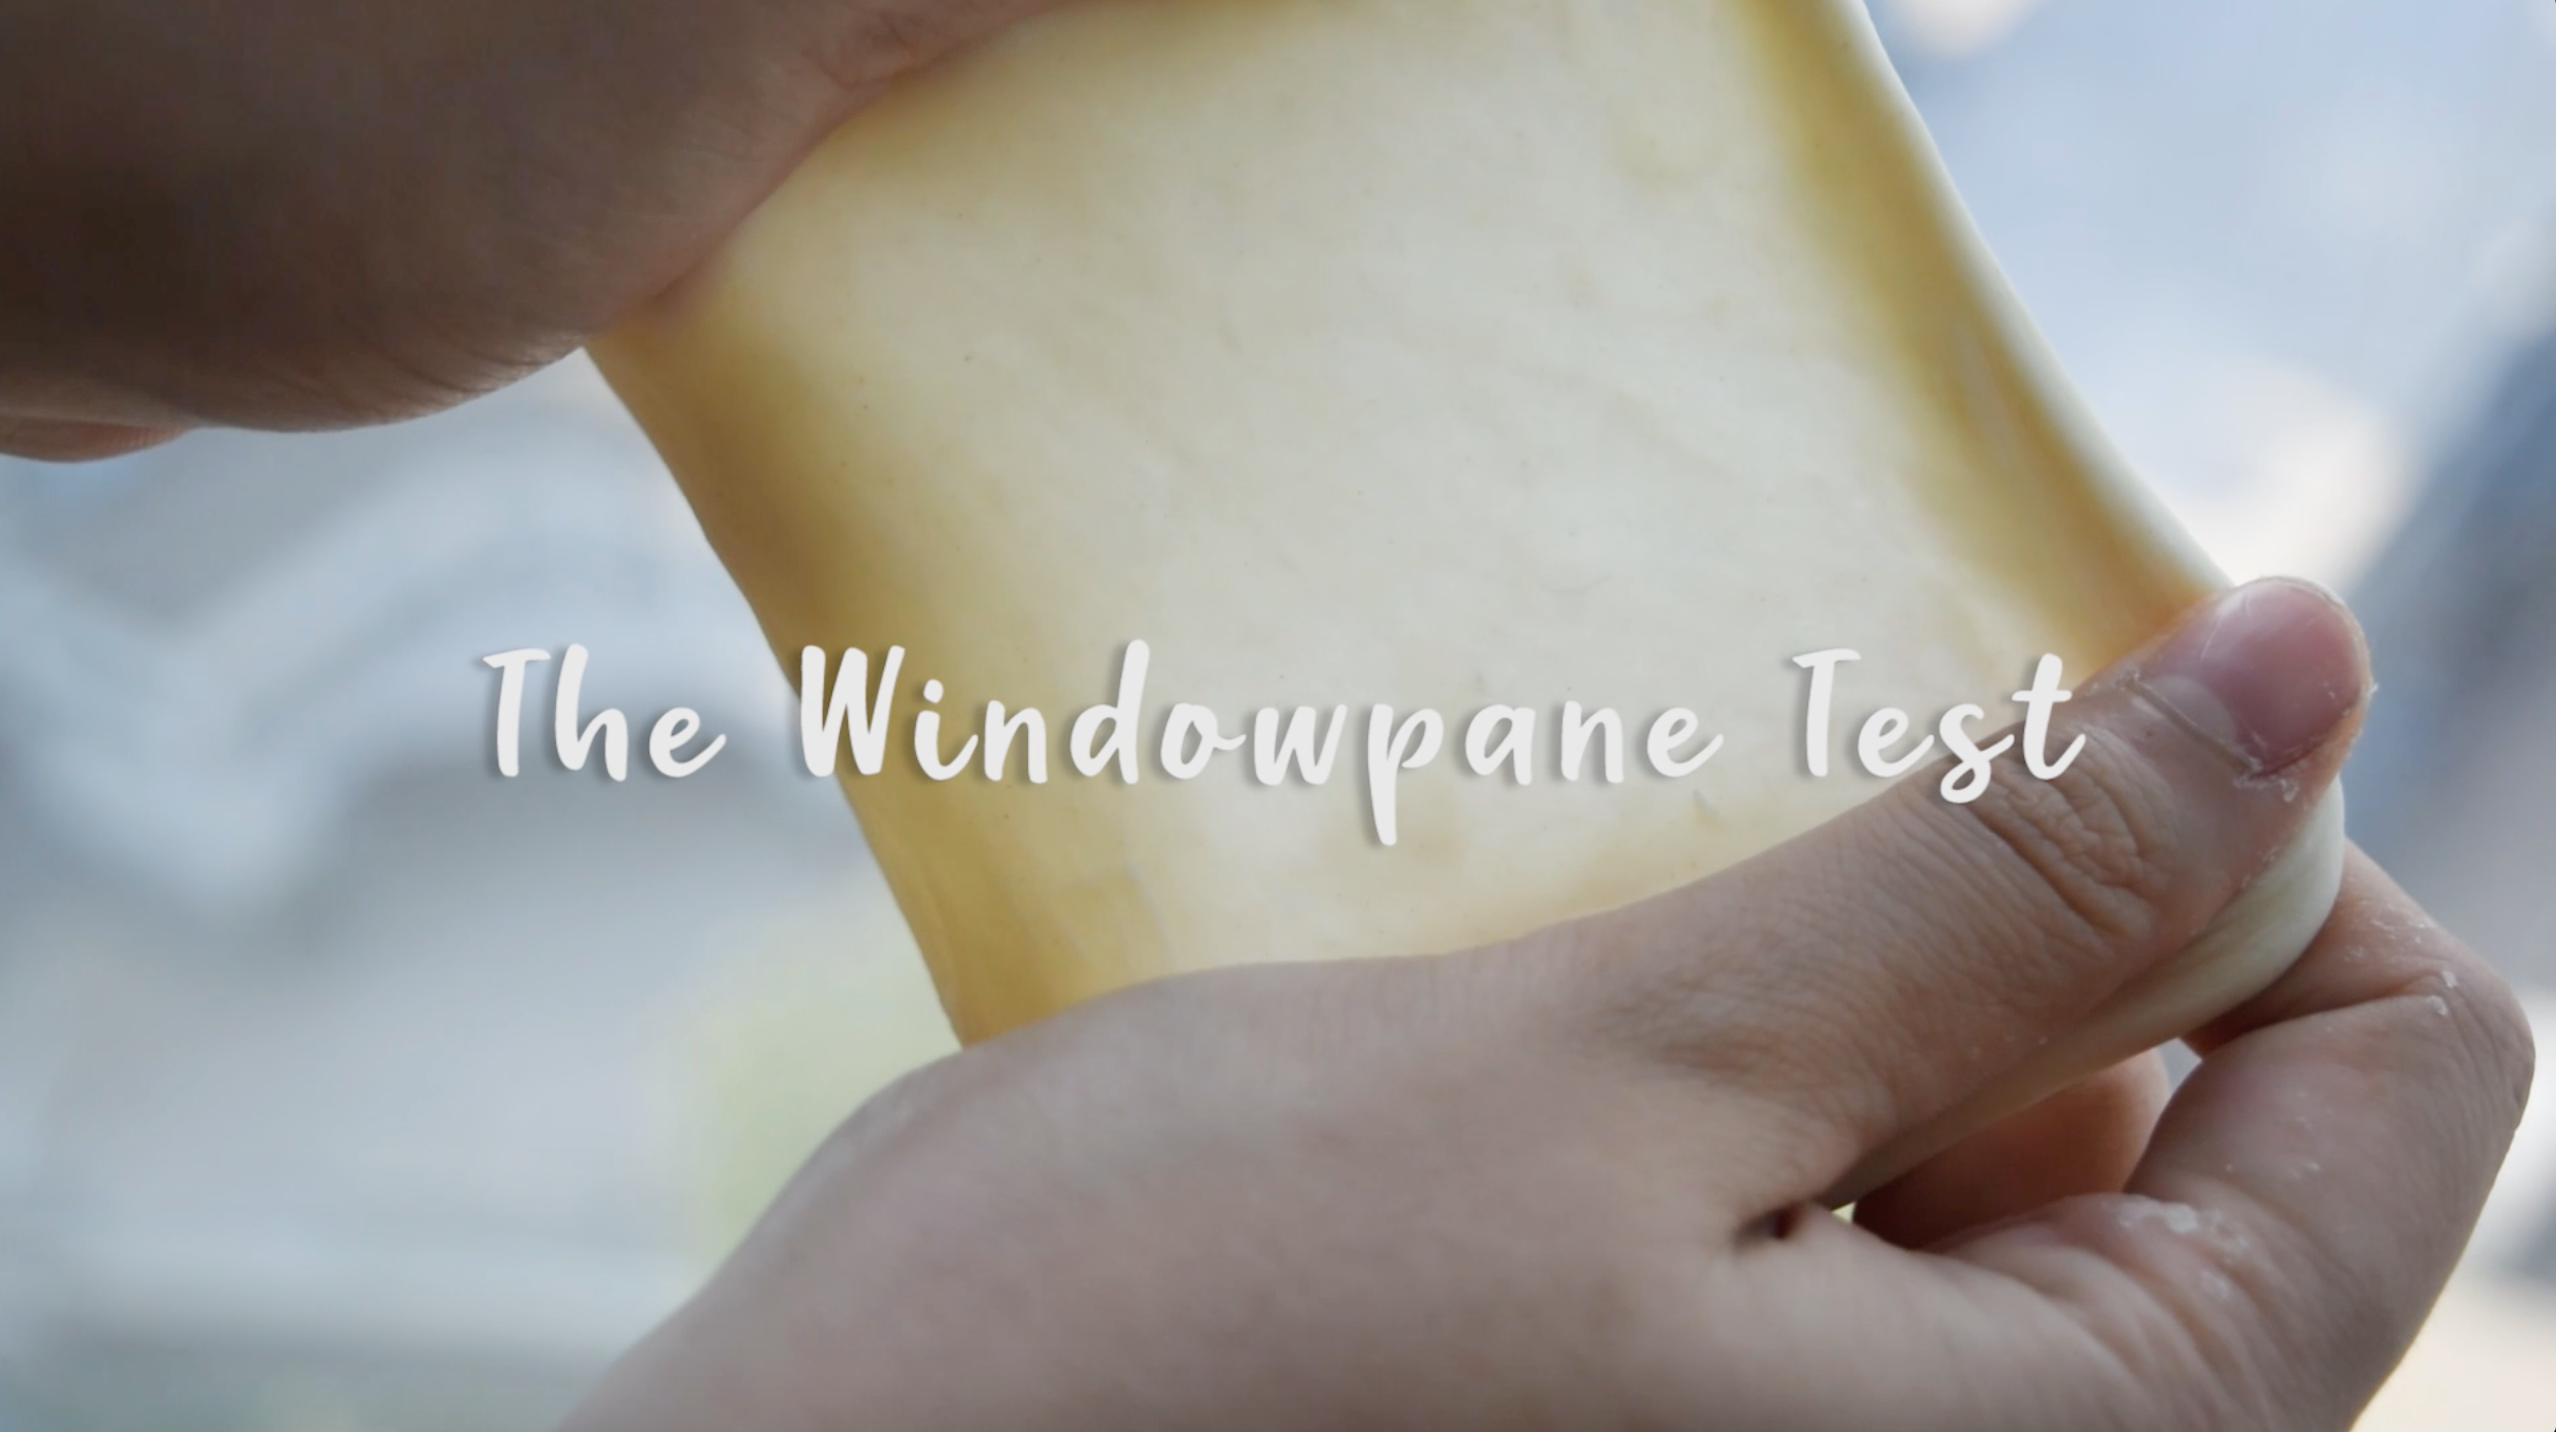 Translucent membrane of windowpane test